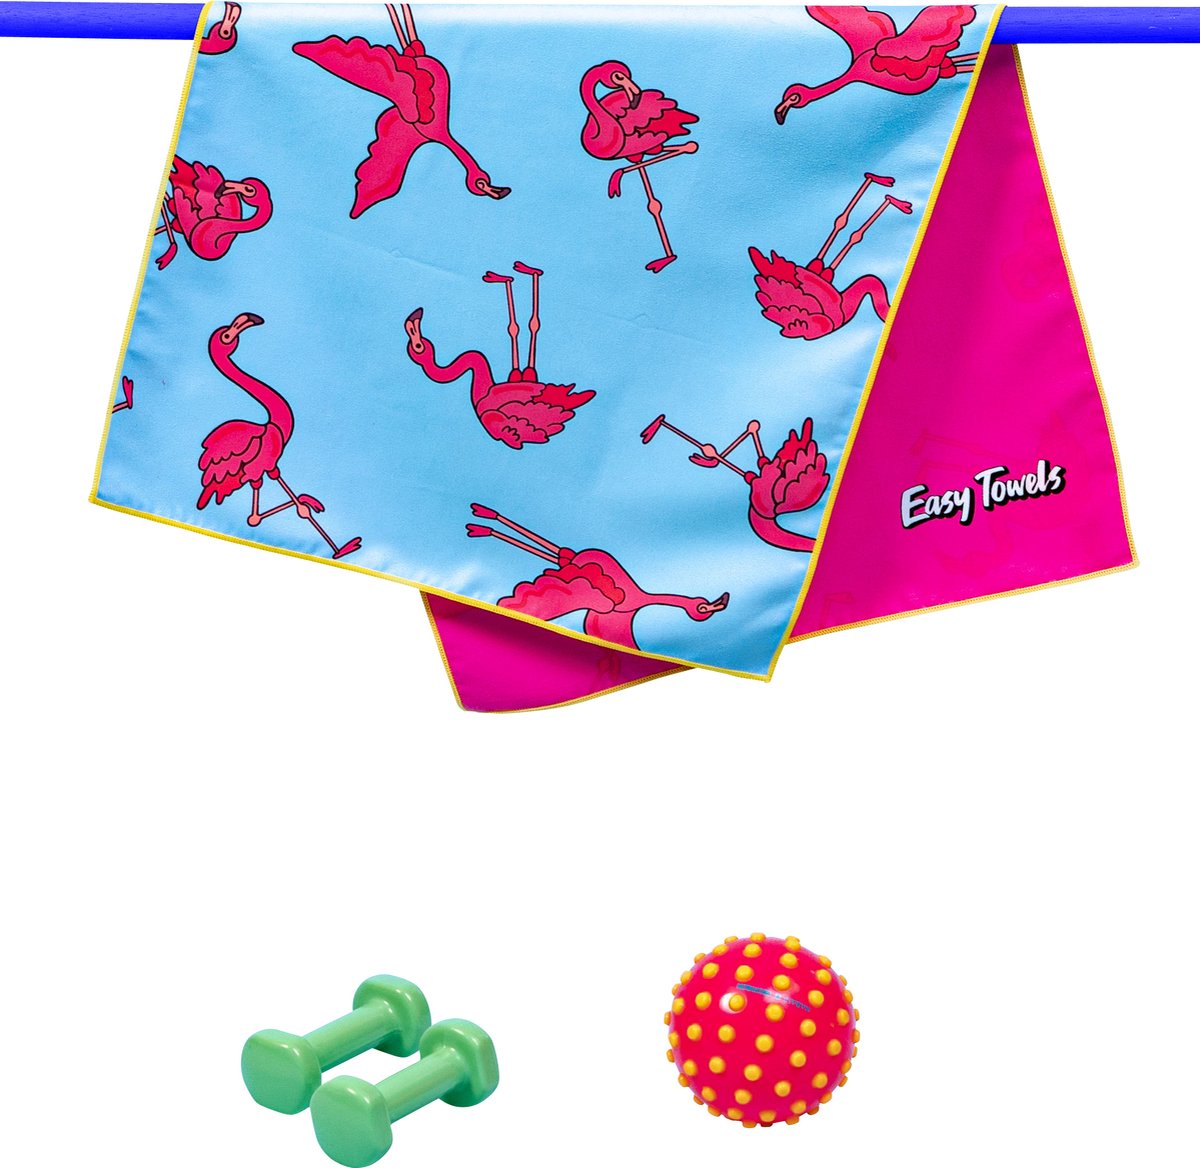 Easy Towels - Sporthanddoek Fitness - Microvezel - Flamingo Print